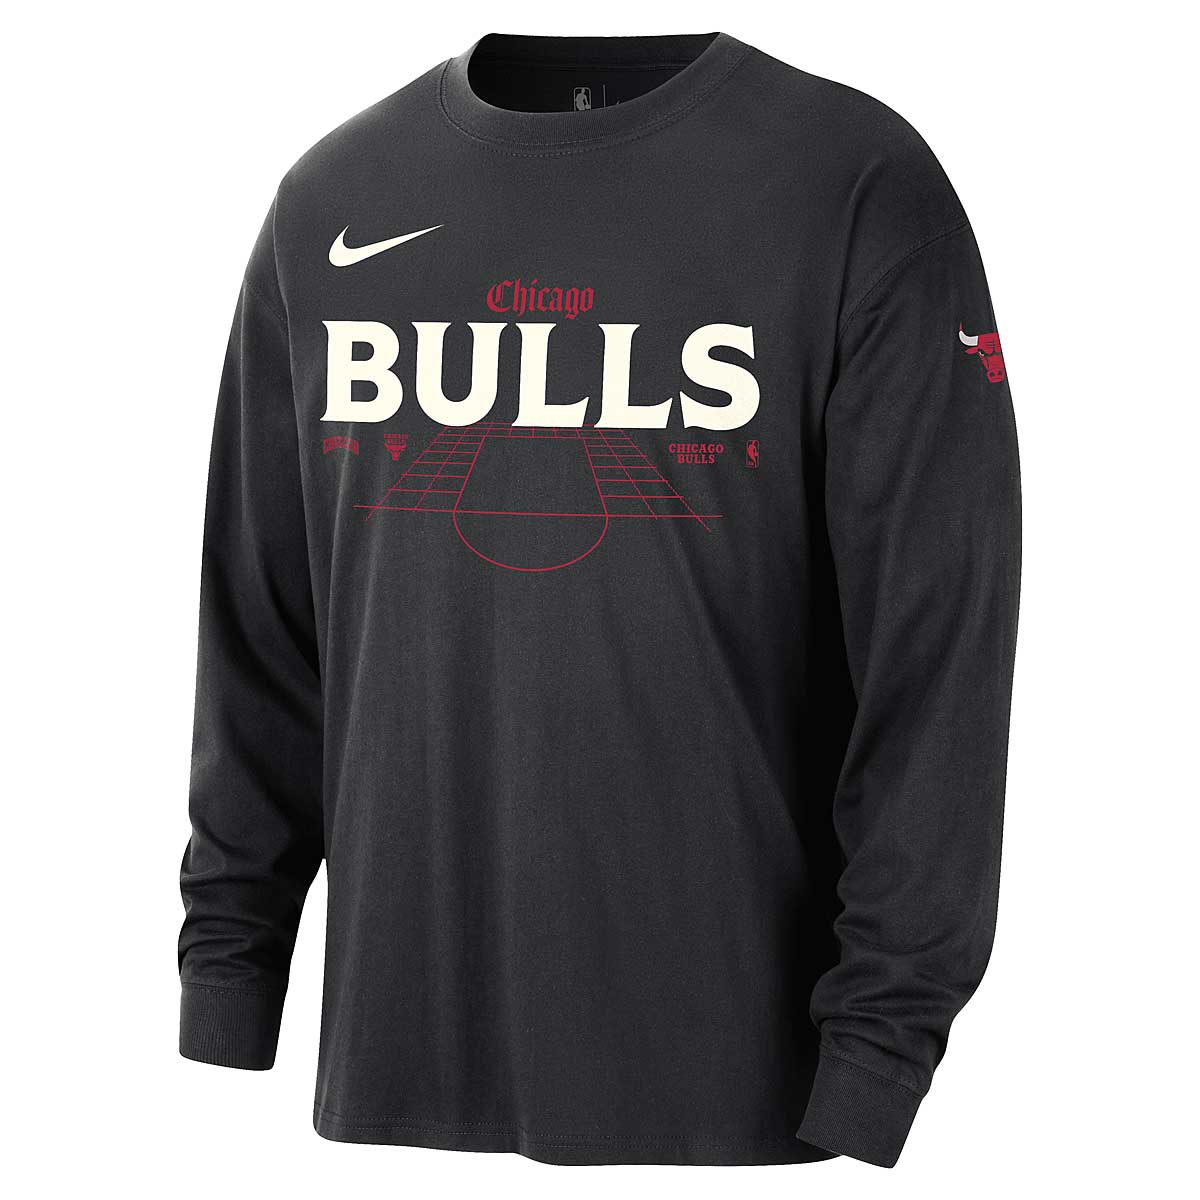 Image of Nike NBA Chicago Bulls Max90 Longsleeve, Black